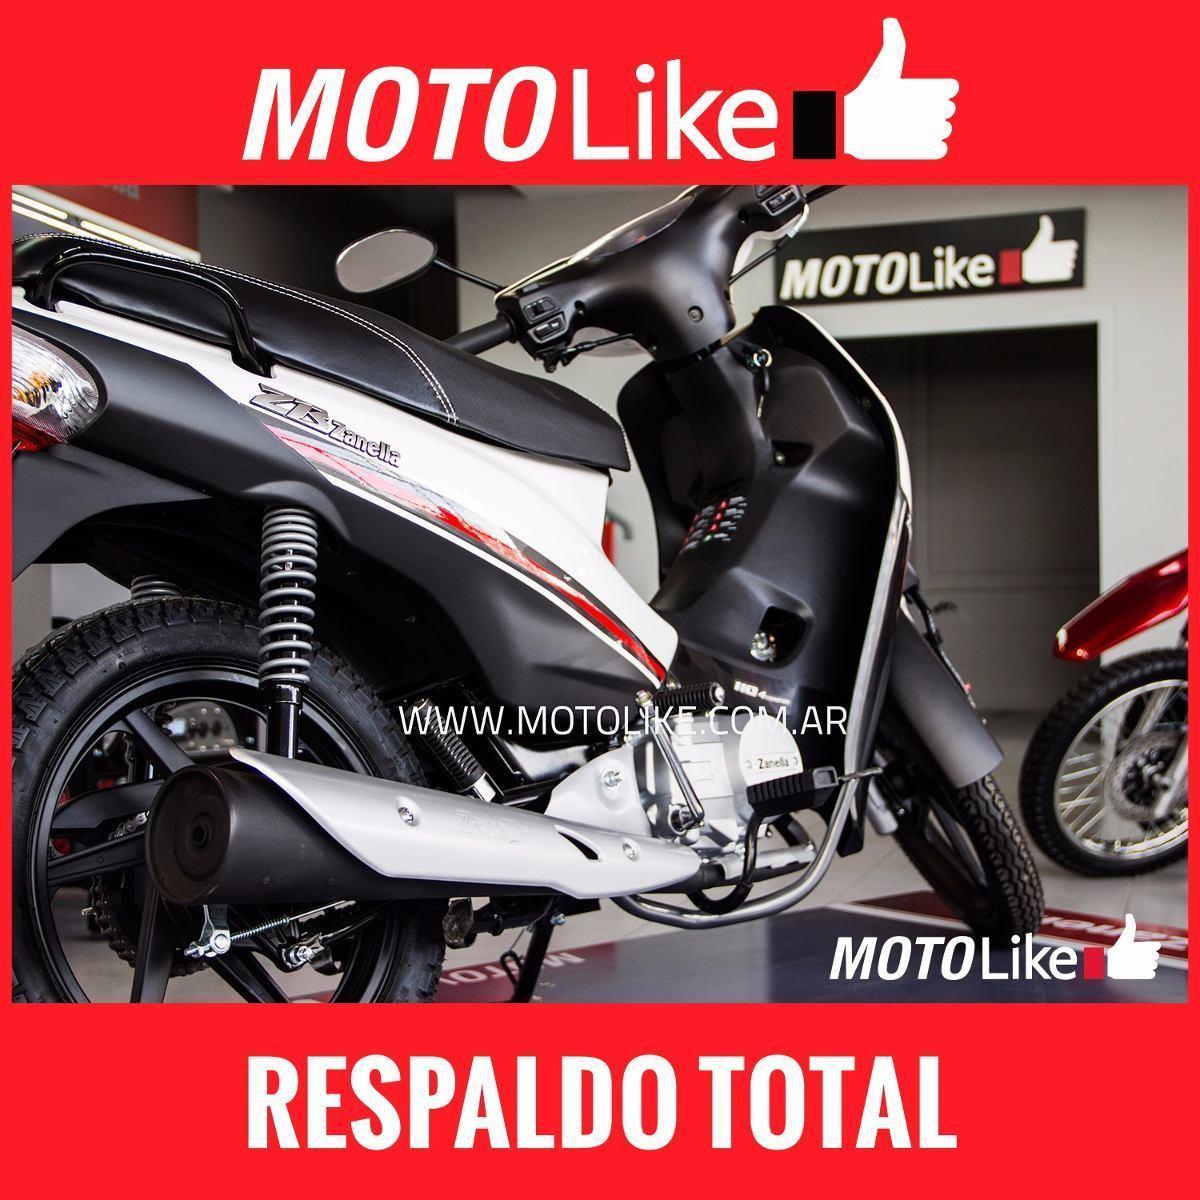 Zanella Zb 110 Full 0km Moto Like Oferta